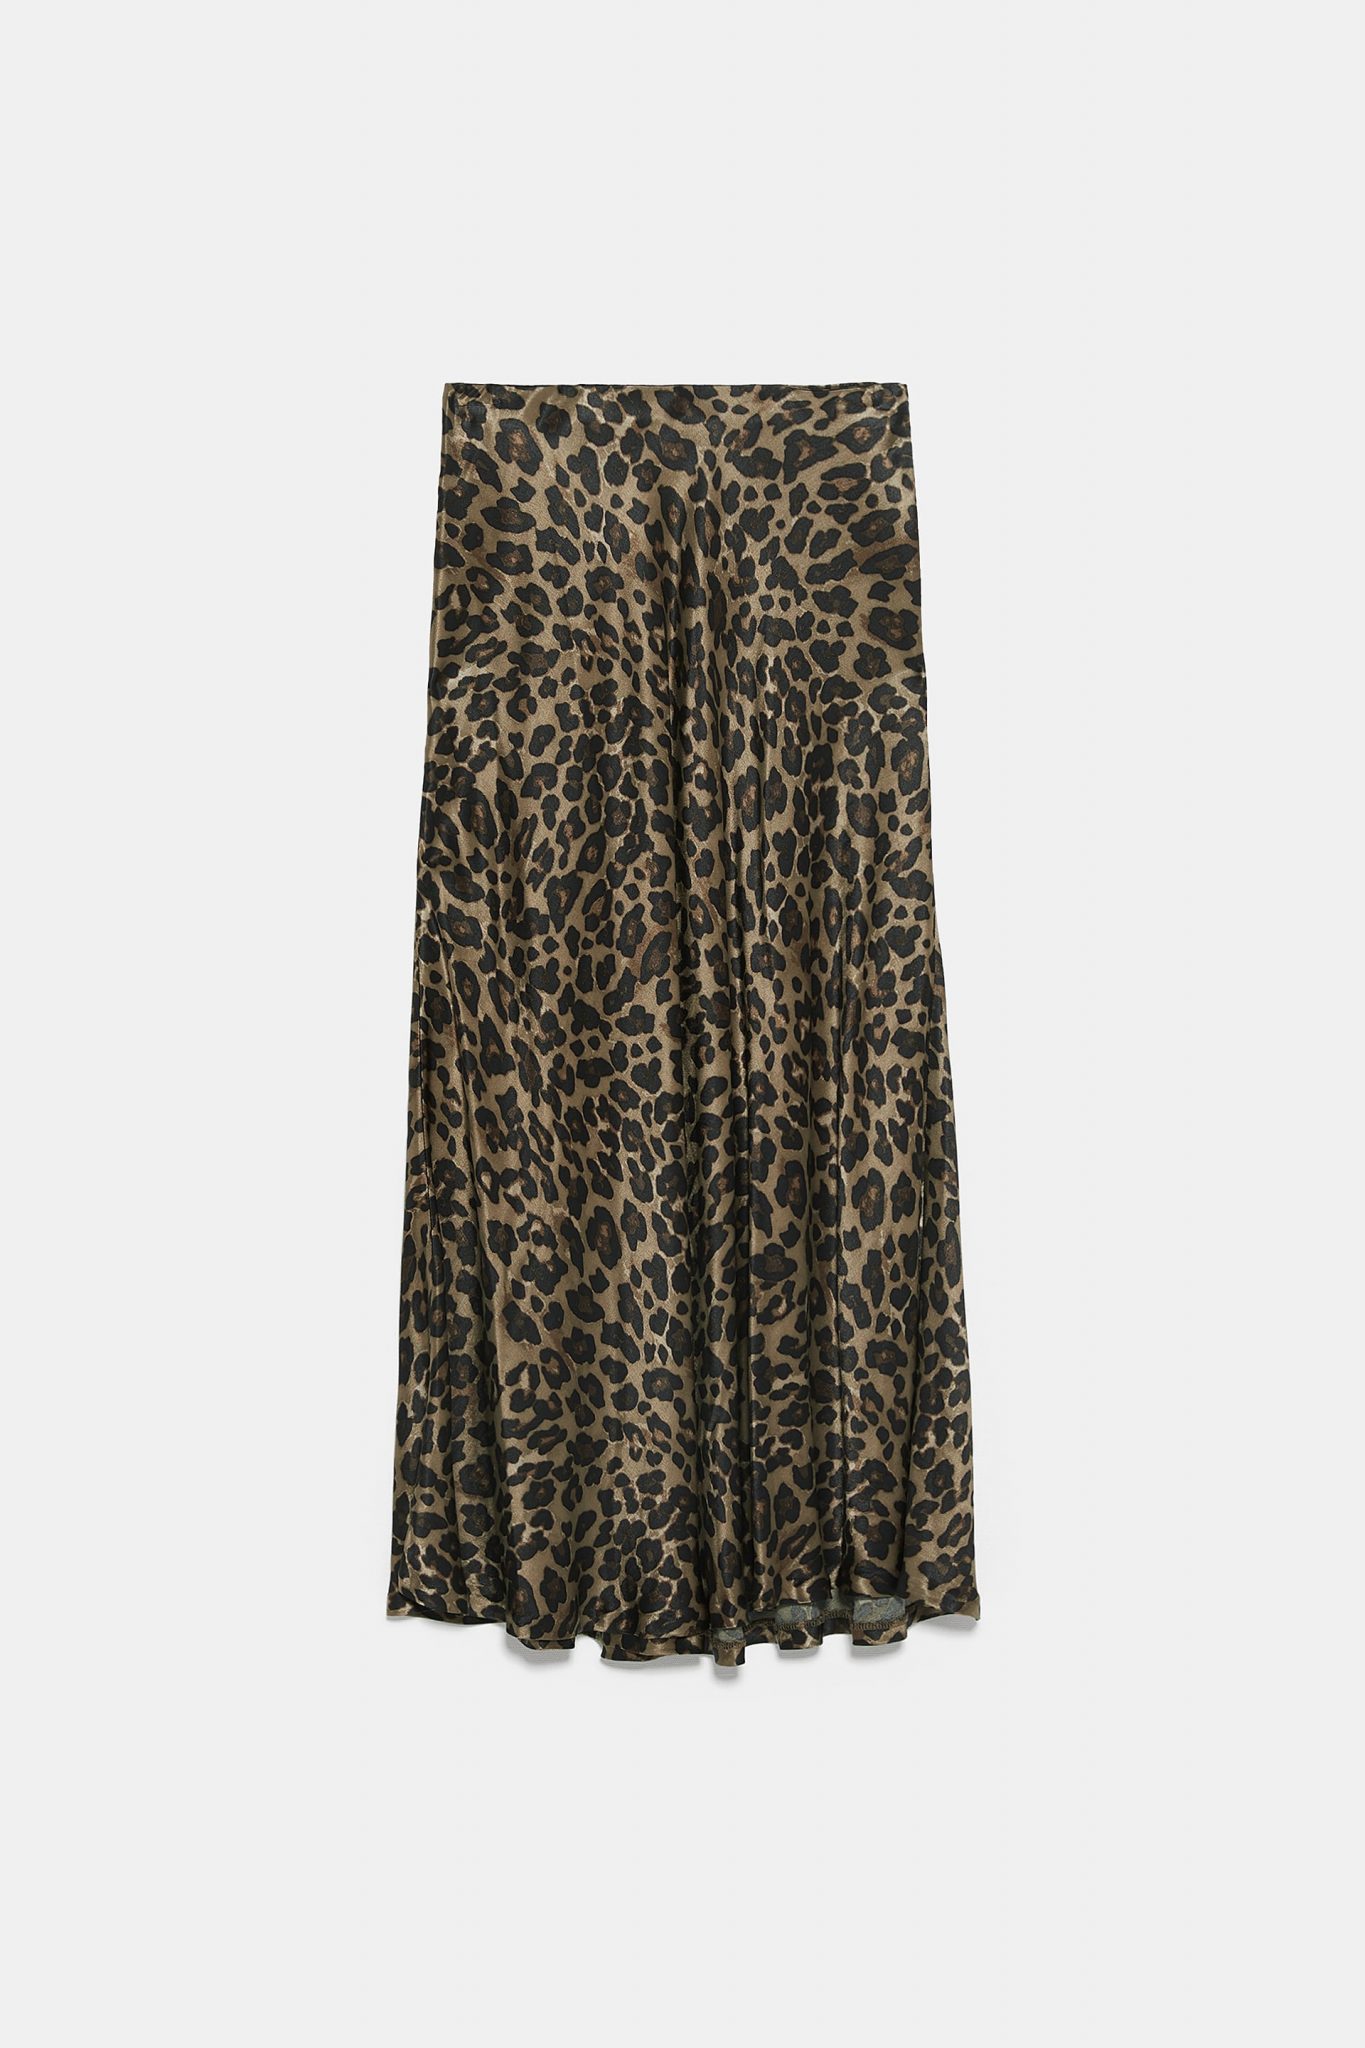 zara leopard print skirt